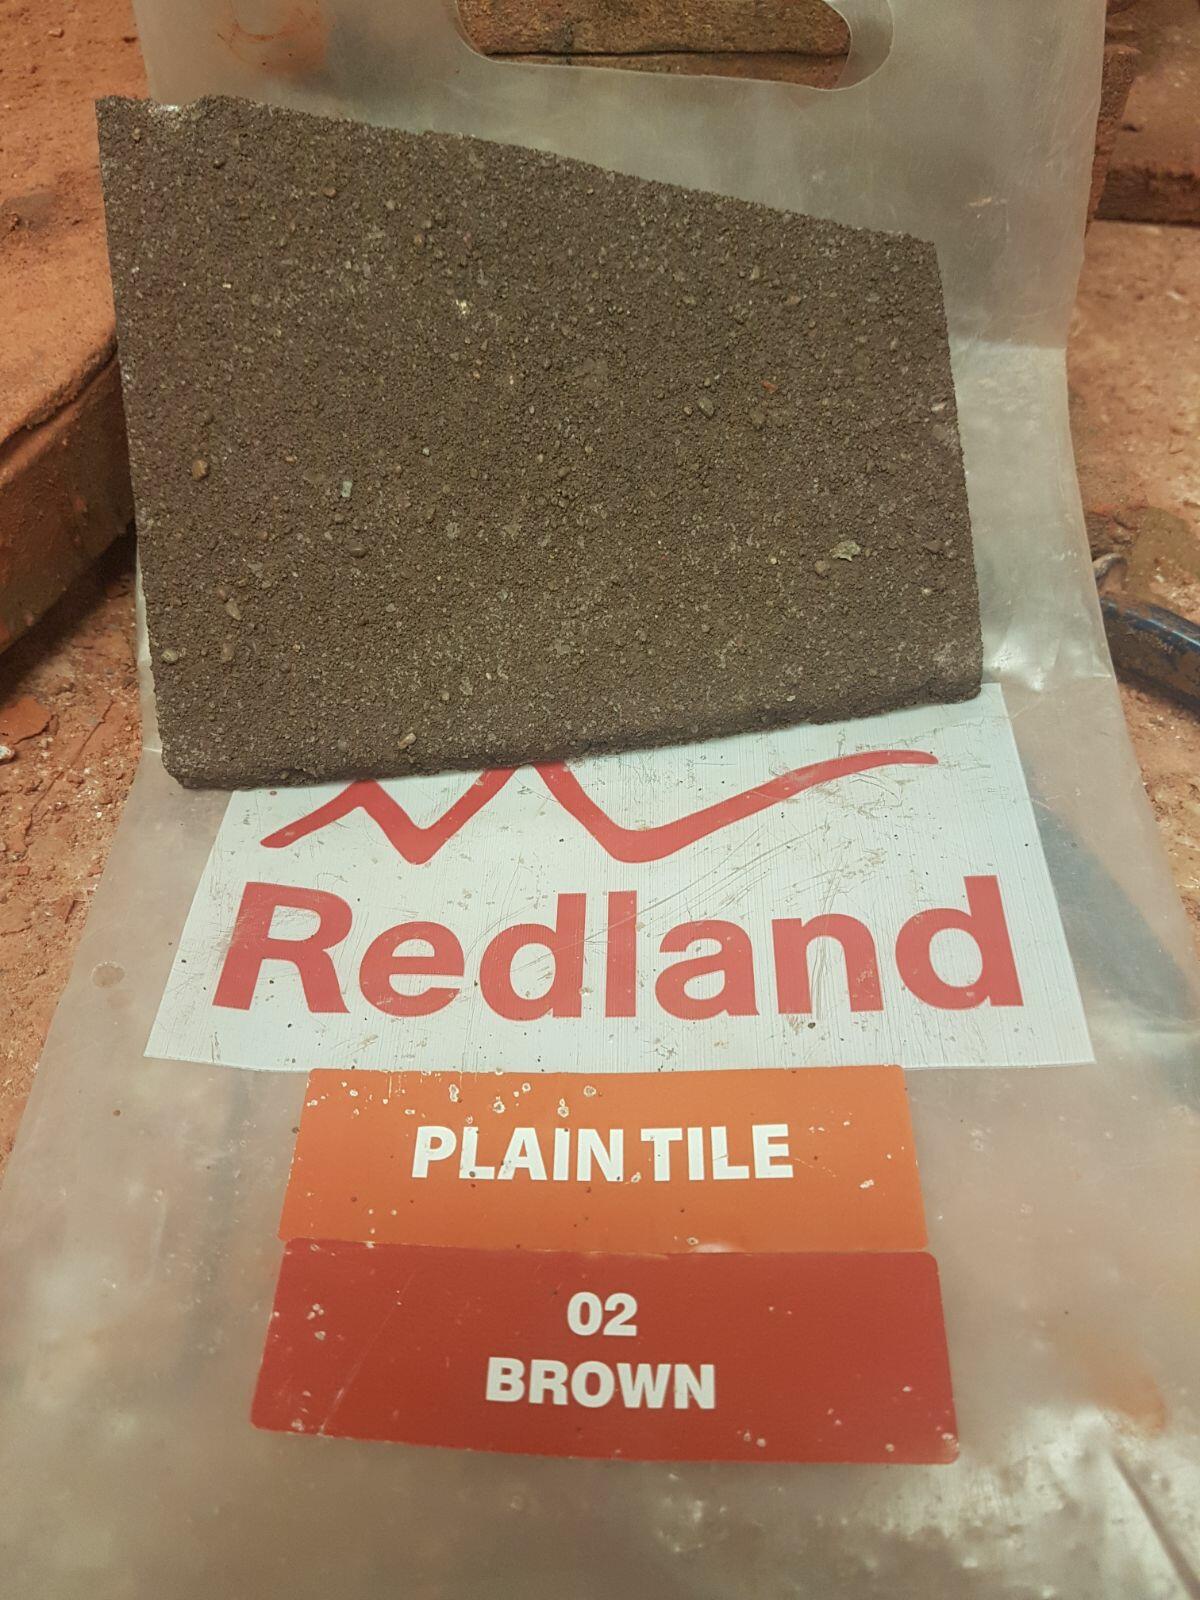 Redland granular brown tile